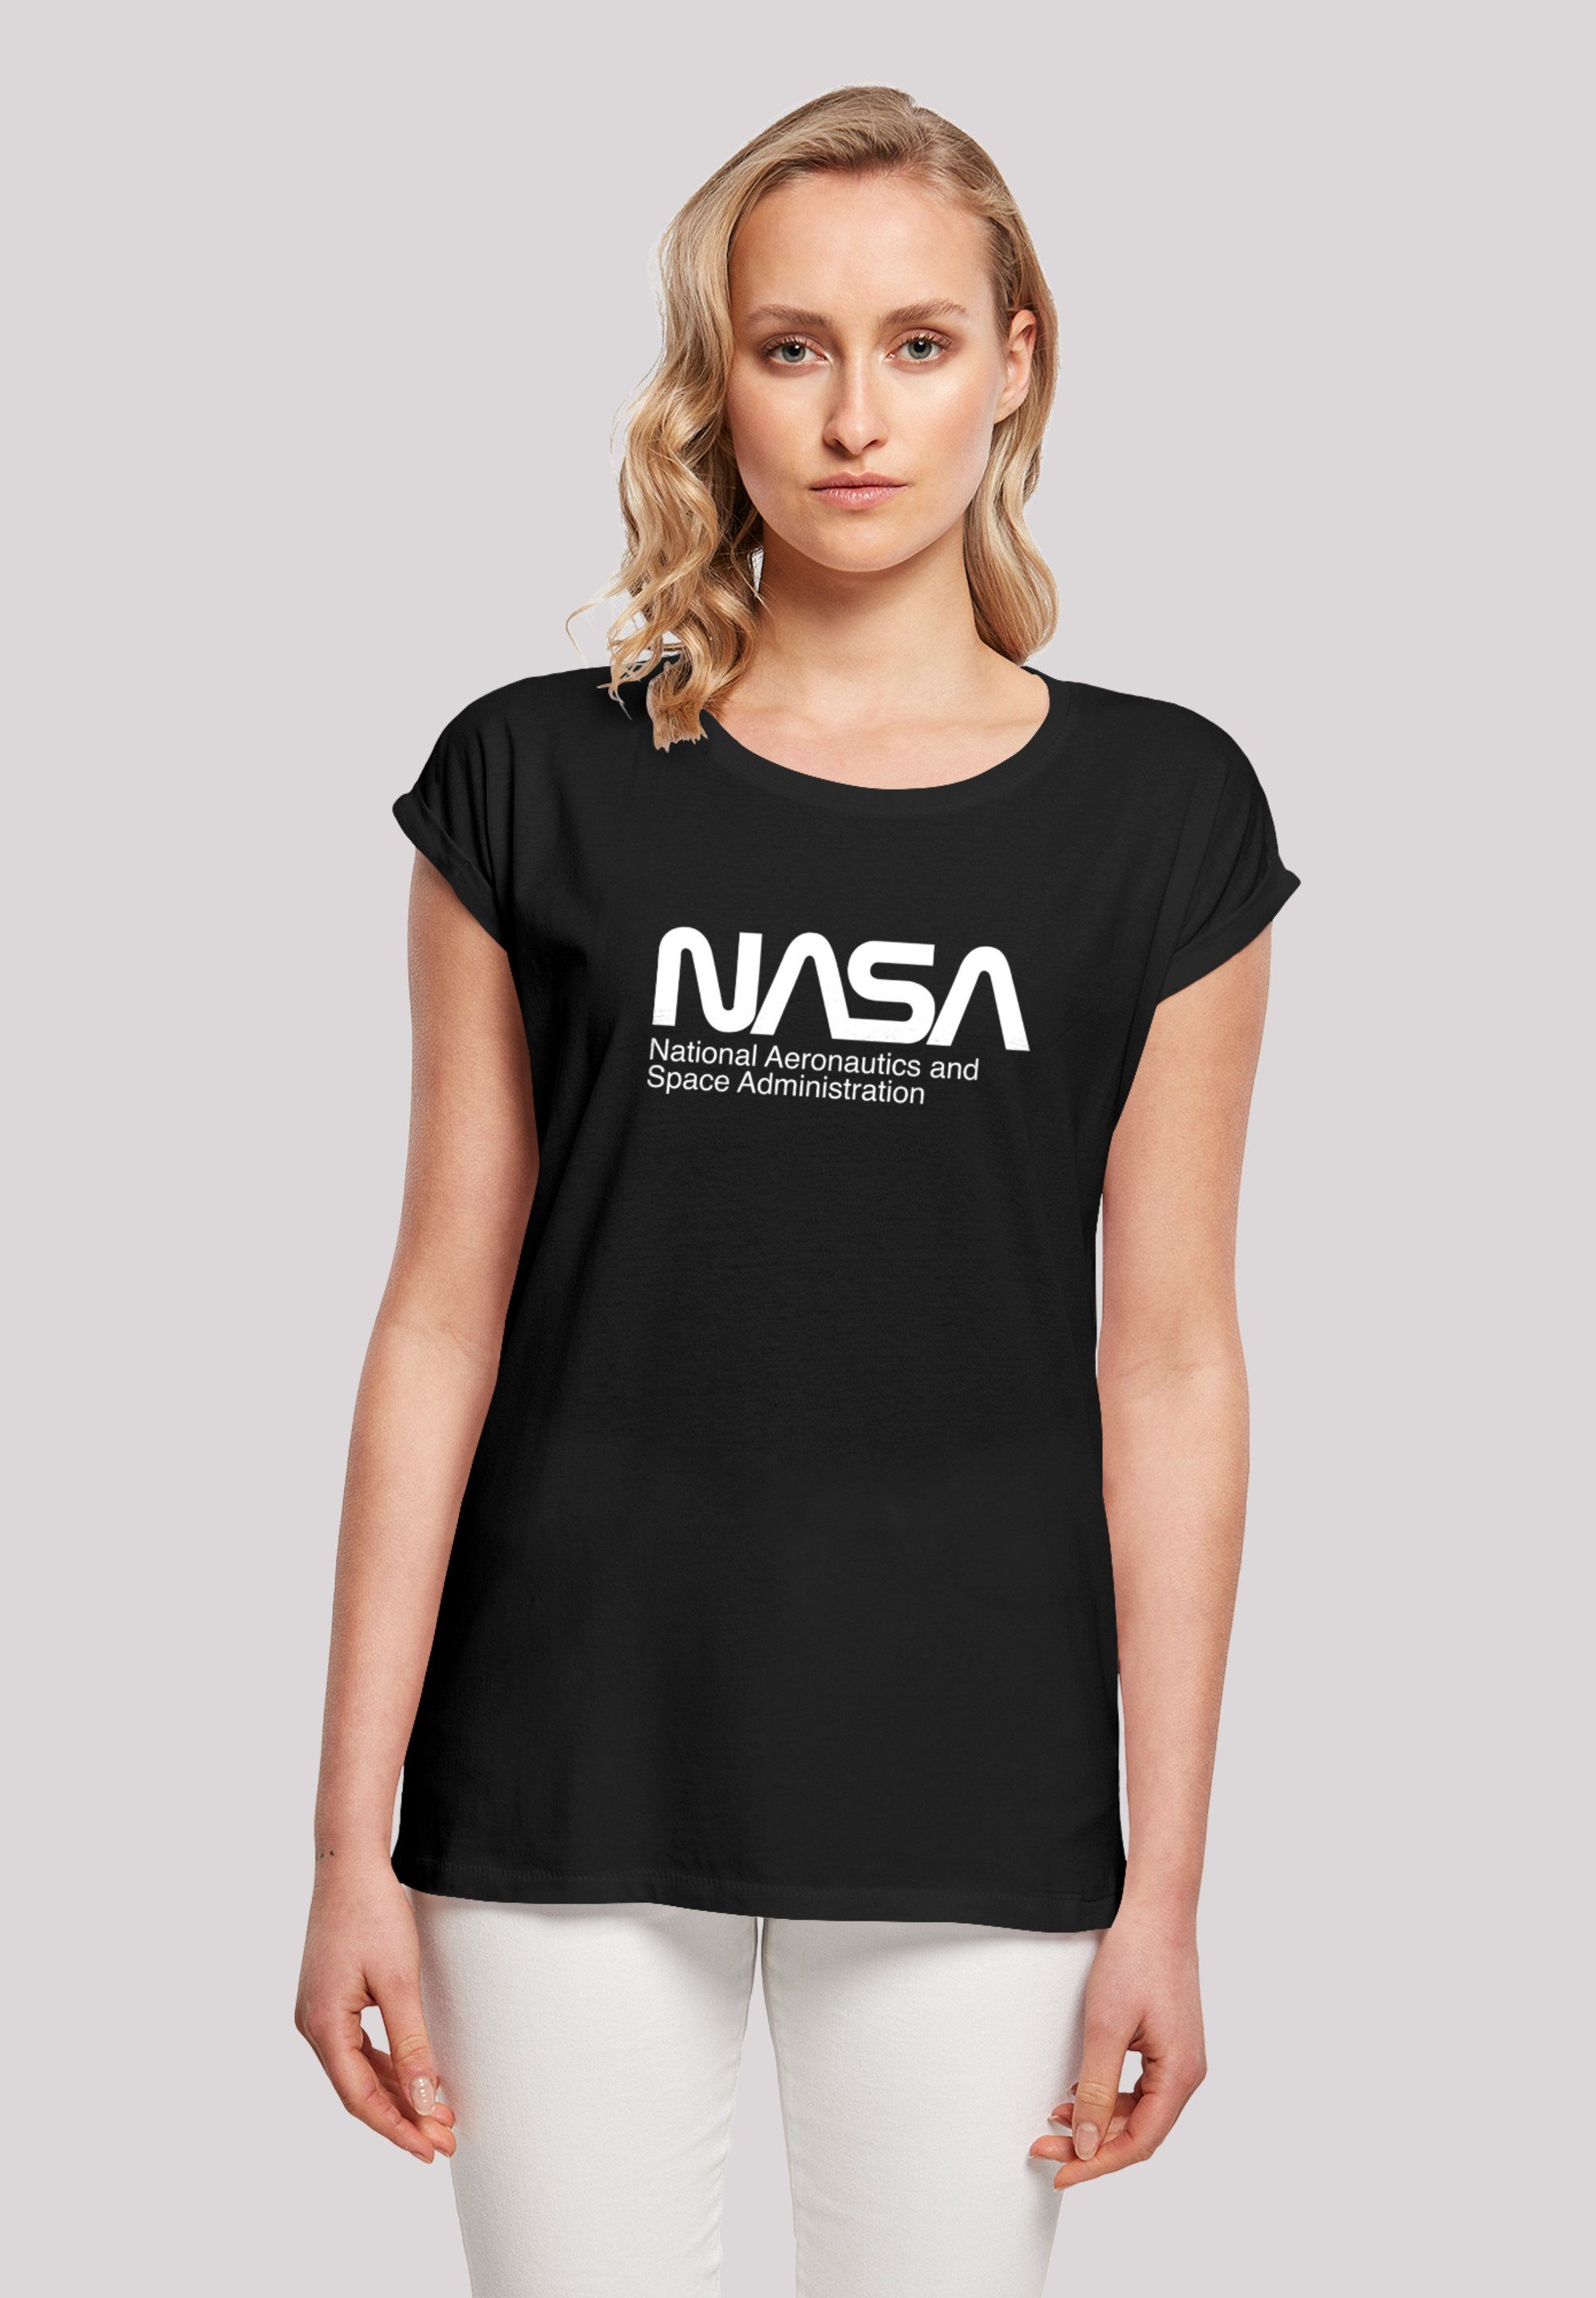 Model S And cm trägt 170 und Space\' Größe F4NT4STIC groß Print, T-Shirt NASA Aeronautics ist Das